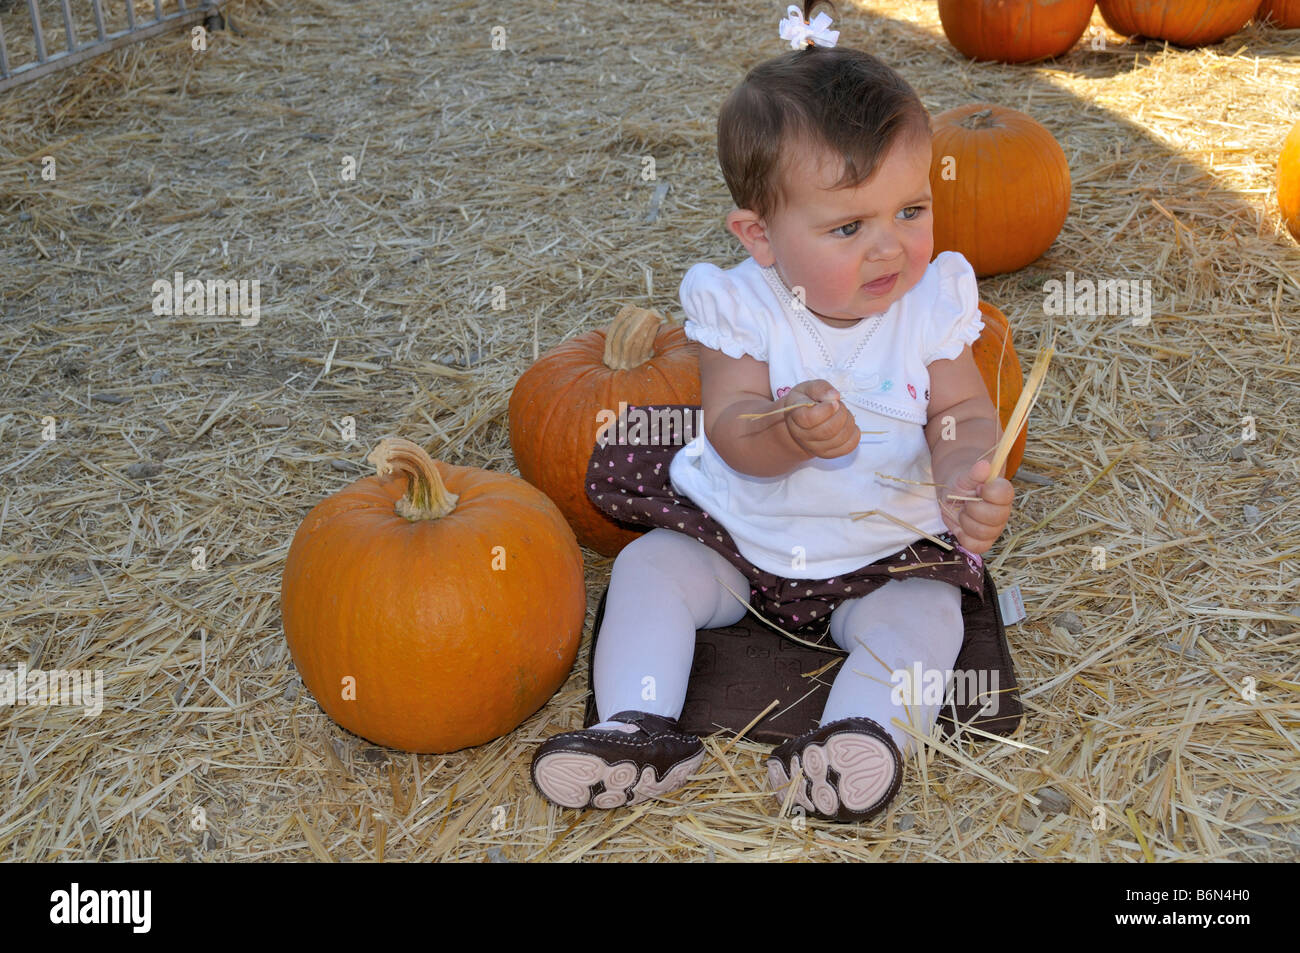 Baby girl sitting next to pumpkin Stock Photo